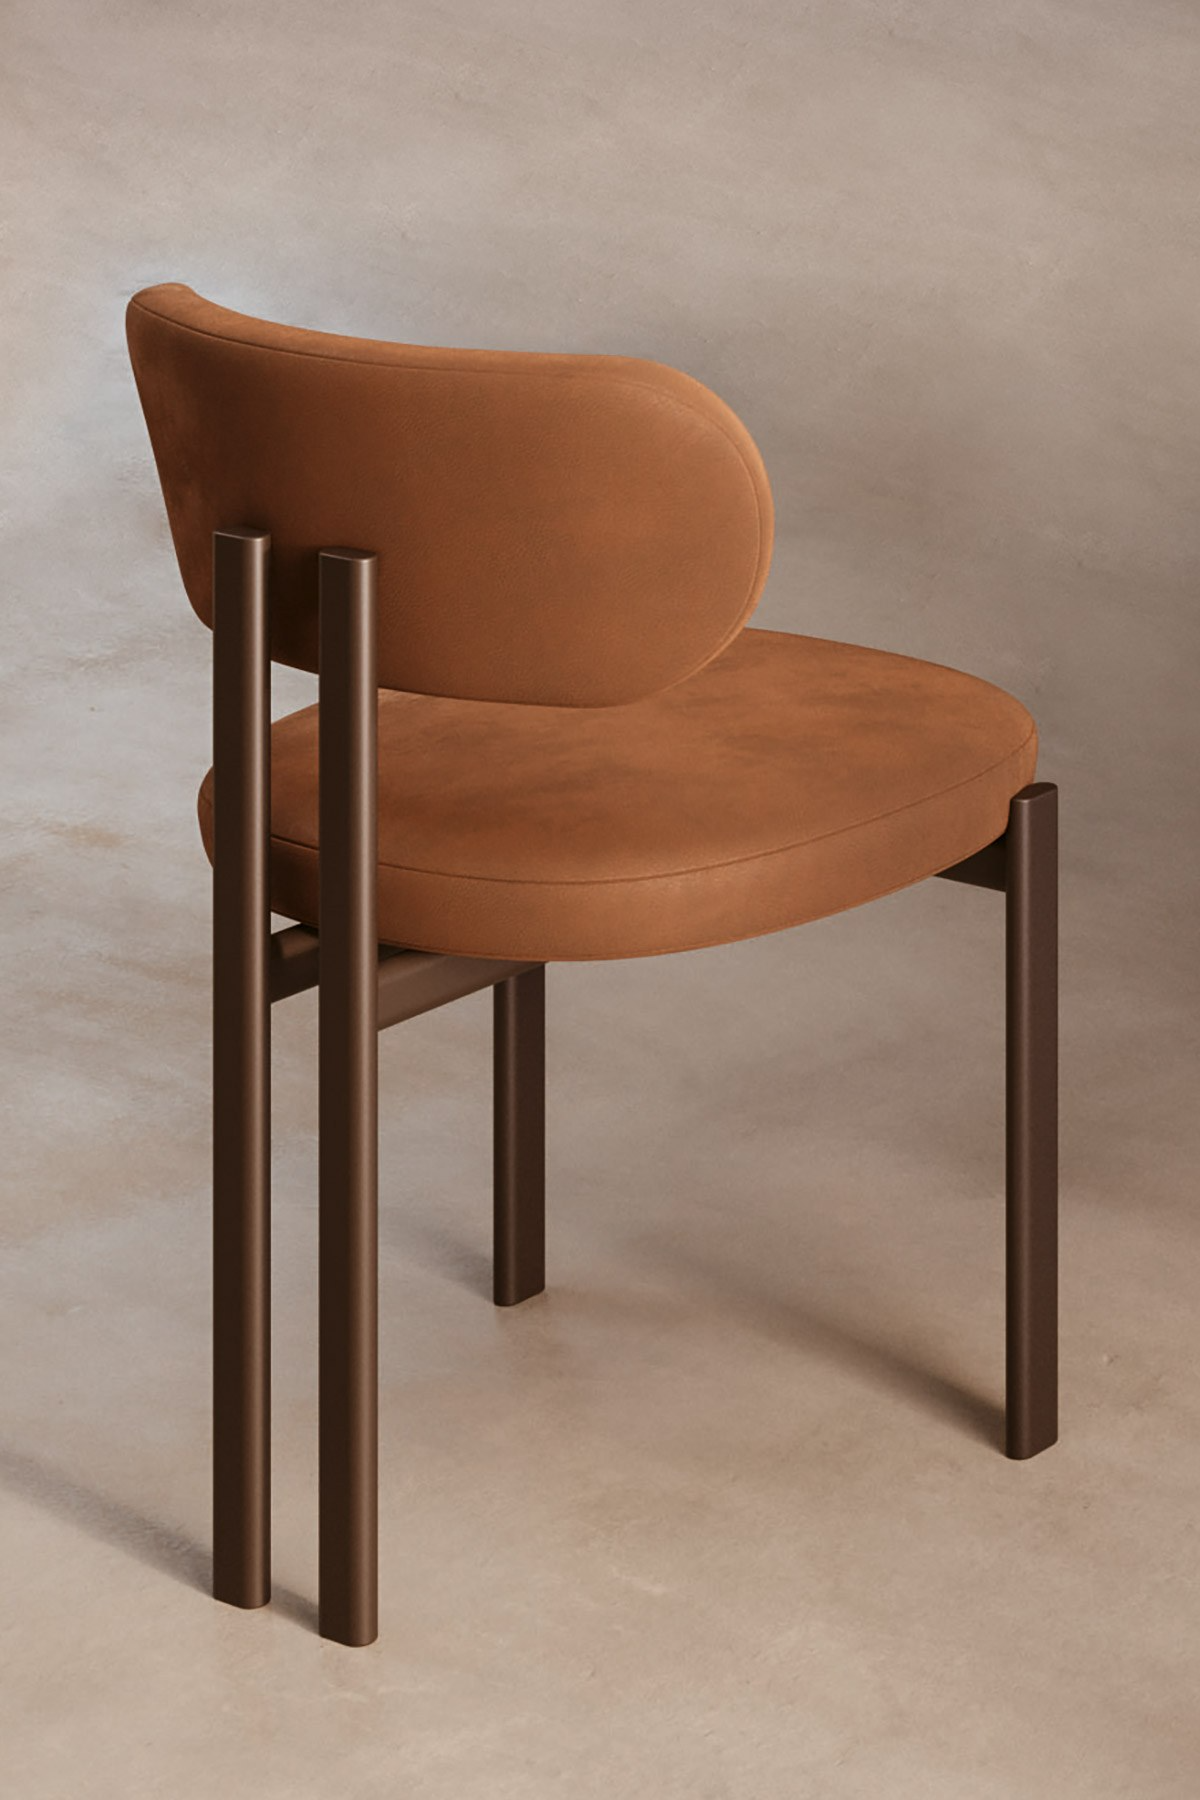 Metal Chair design ideas | Metal
  Furniture design and steel ideas